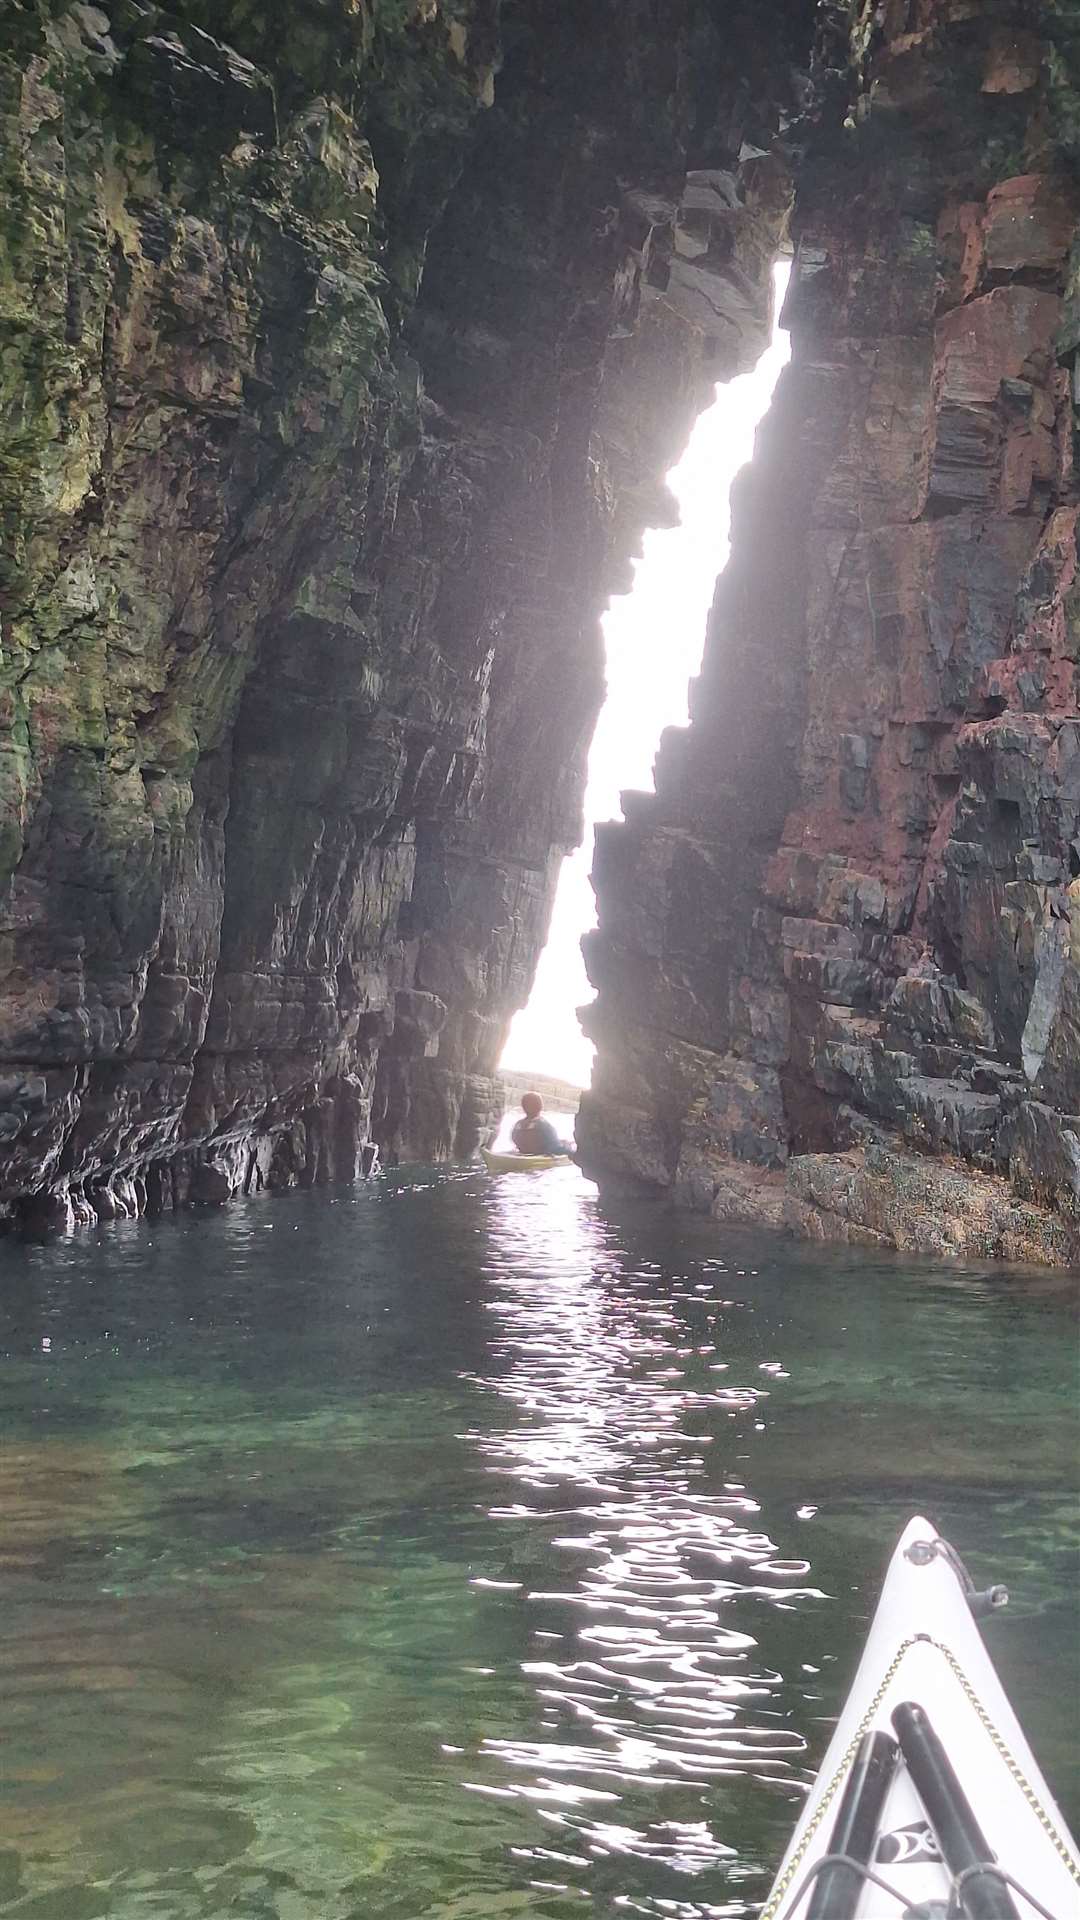 A narrow cleft through the cliffs.